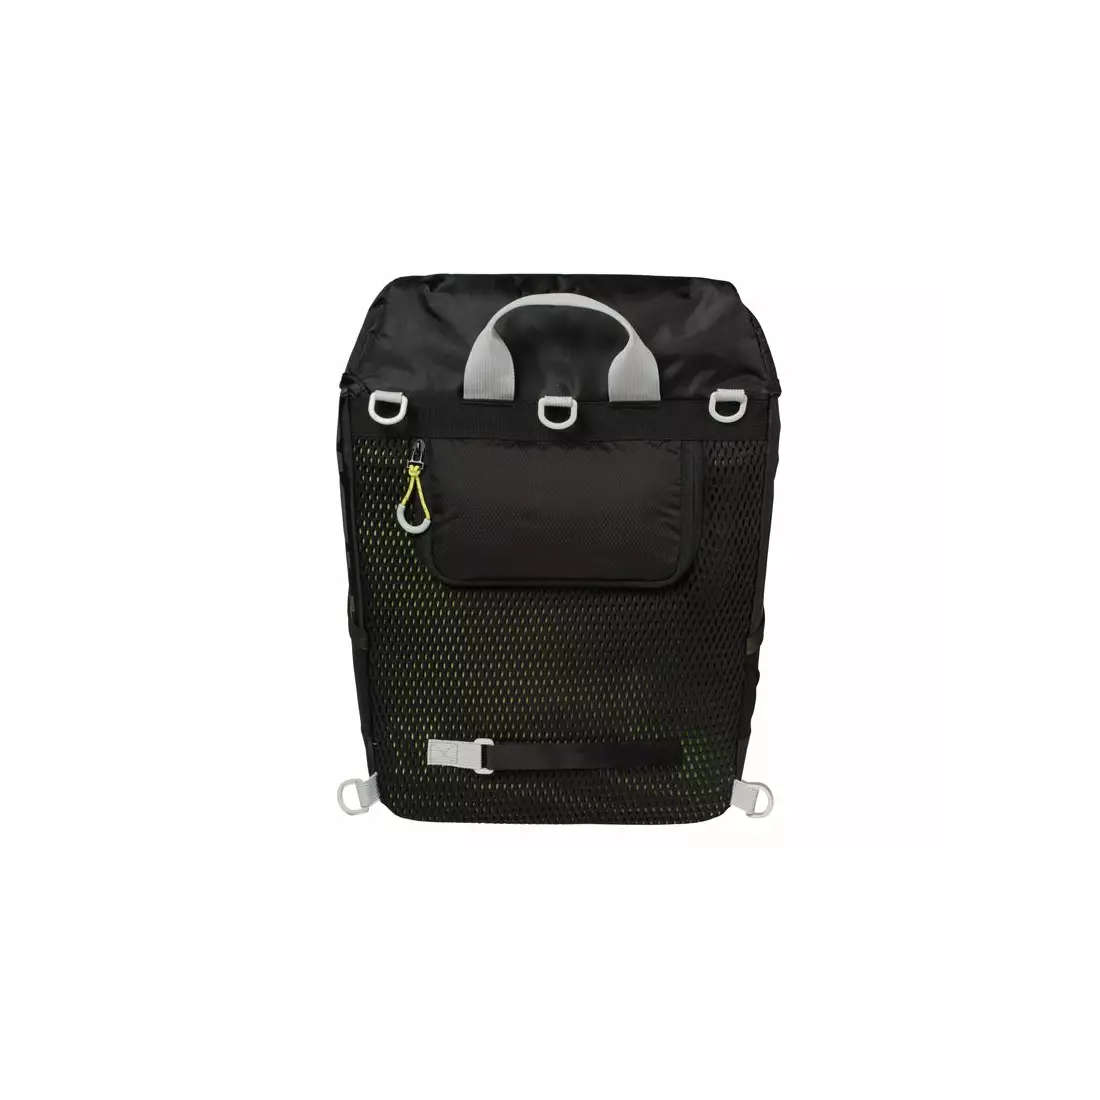 Single travel pannier / backpack BASIL MILES DAYPACK 17L, Hook-On System hook fastening, waterproof polyester, black BAS-17750